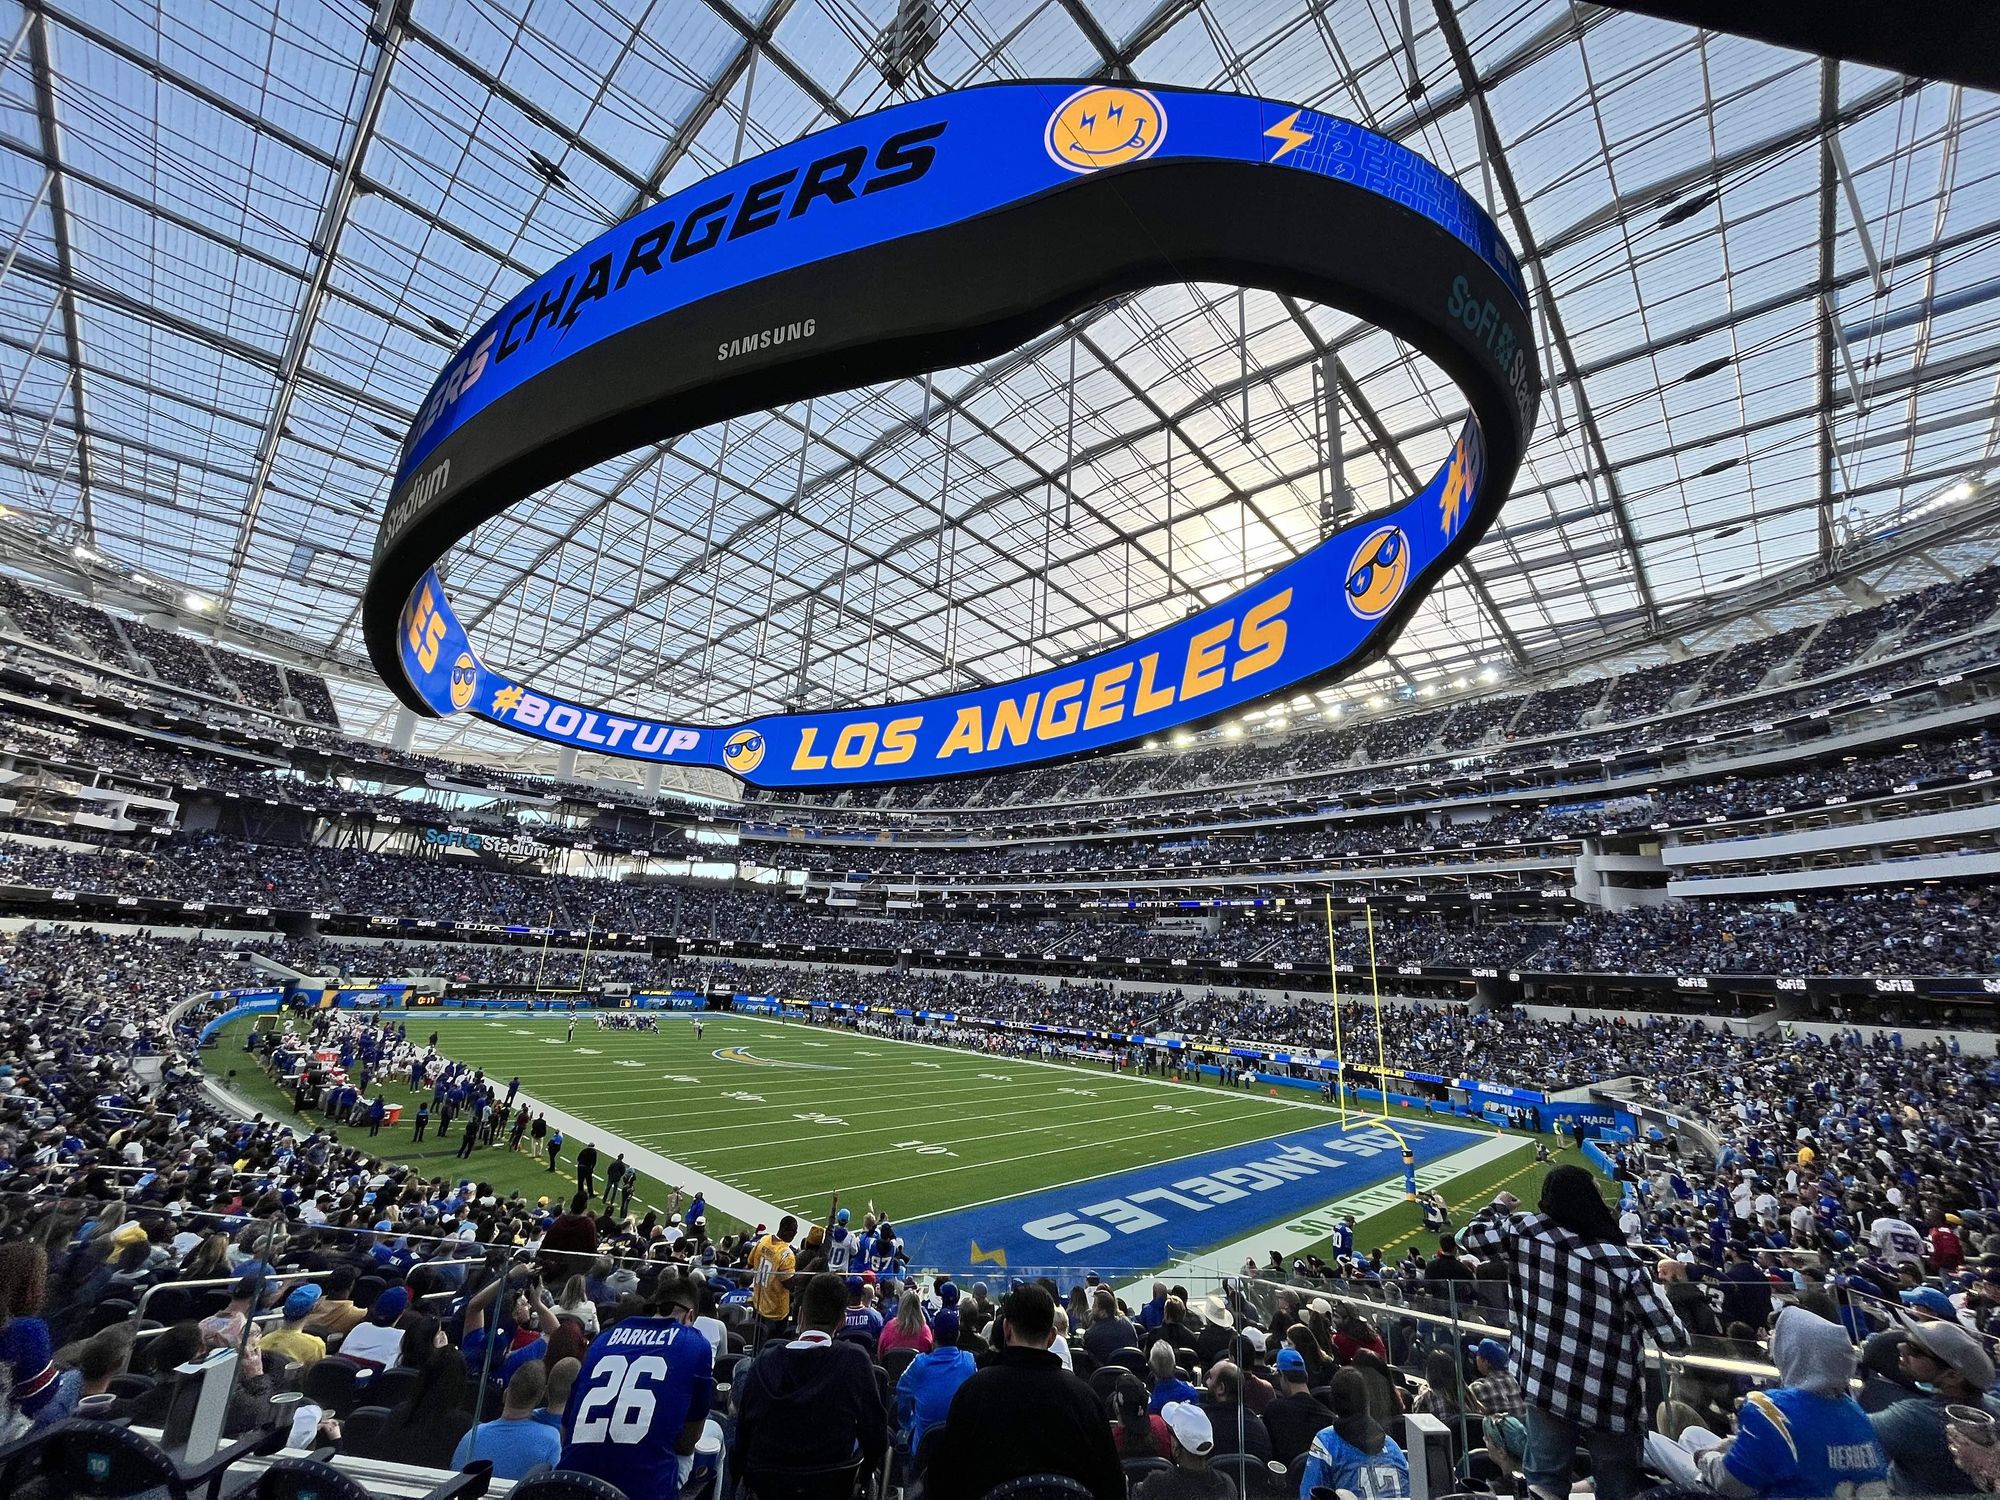 LA Hasn't Built a Stadium of This Size in 100 Years': SoFi Stadium